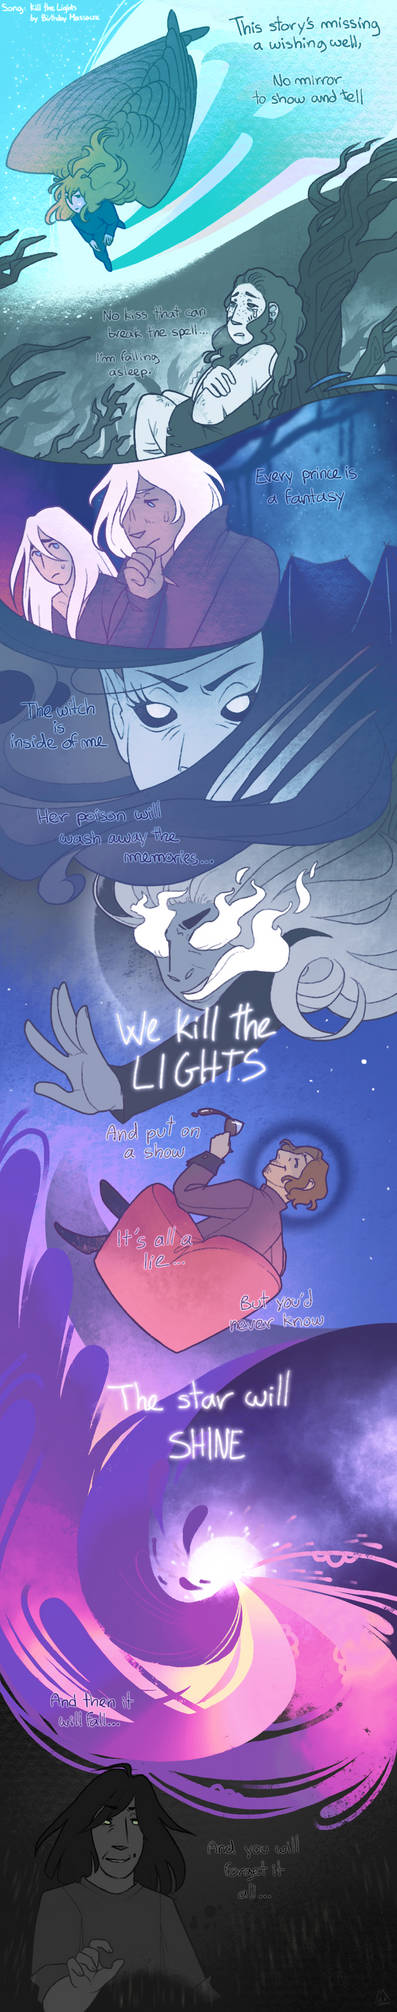 Kill the Lights - AotG